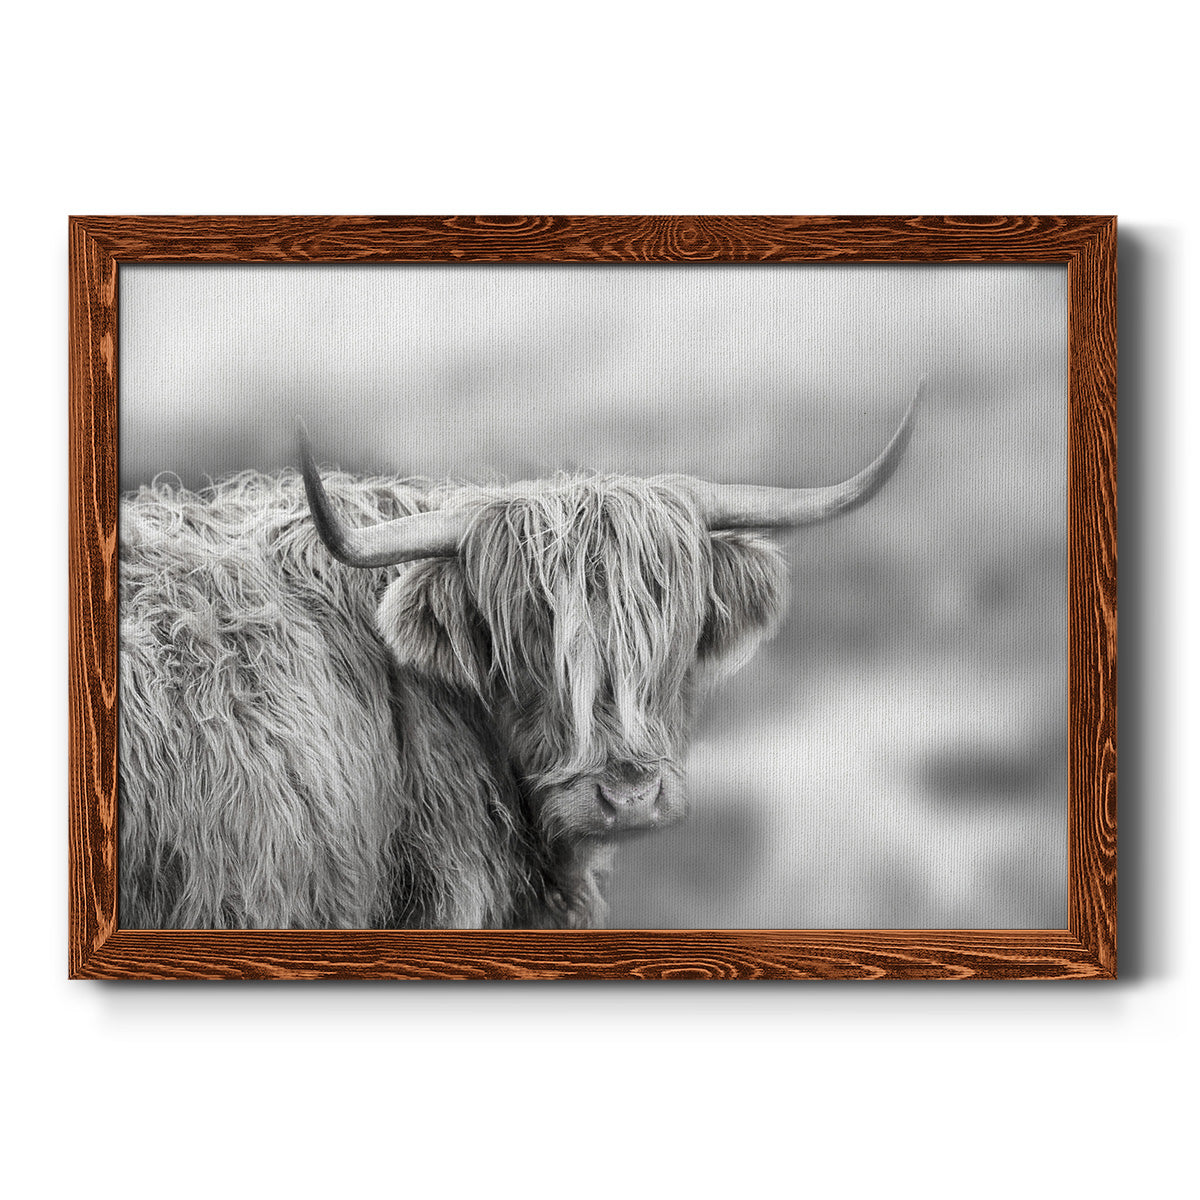 Roaming Isle of Skye-Premium Framed Canvas - Ready to Hang